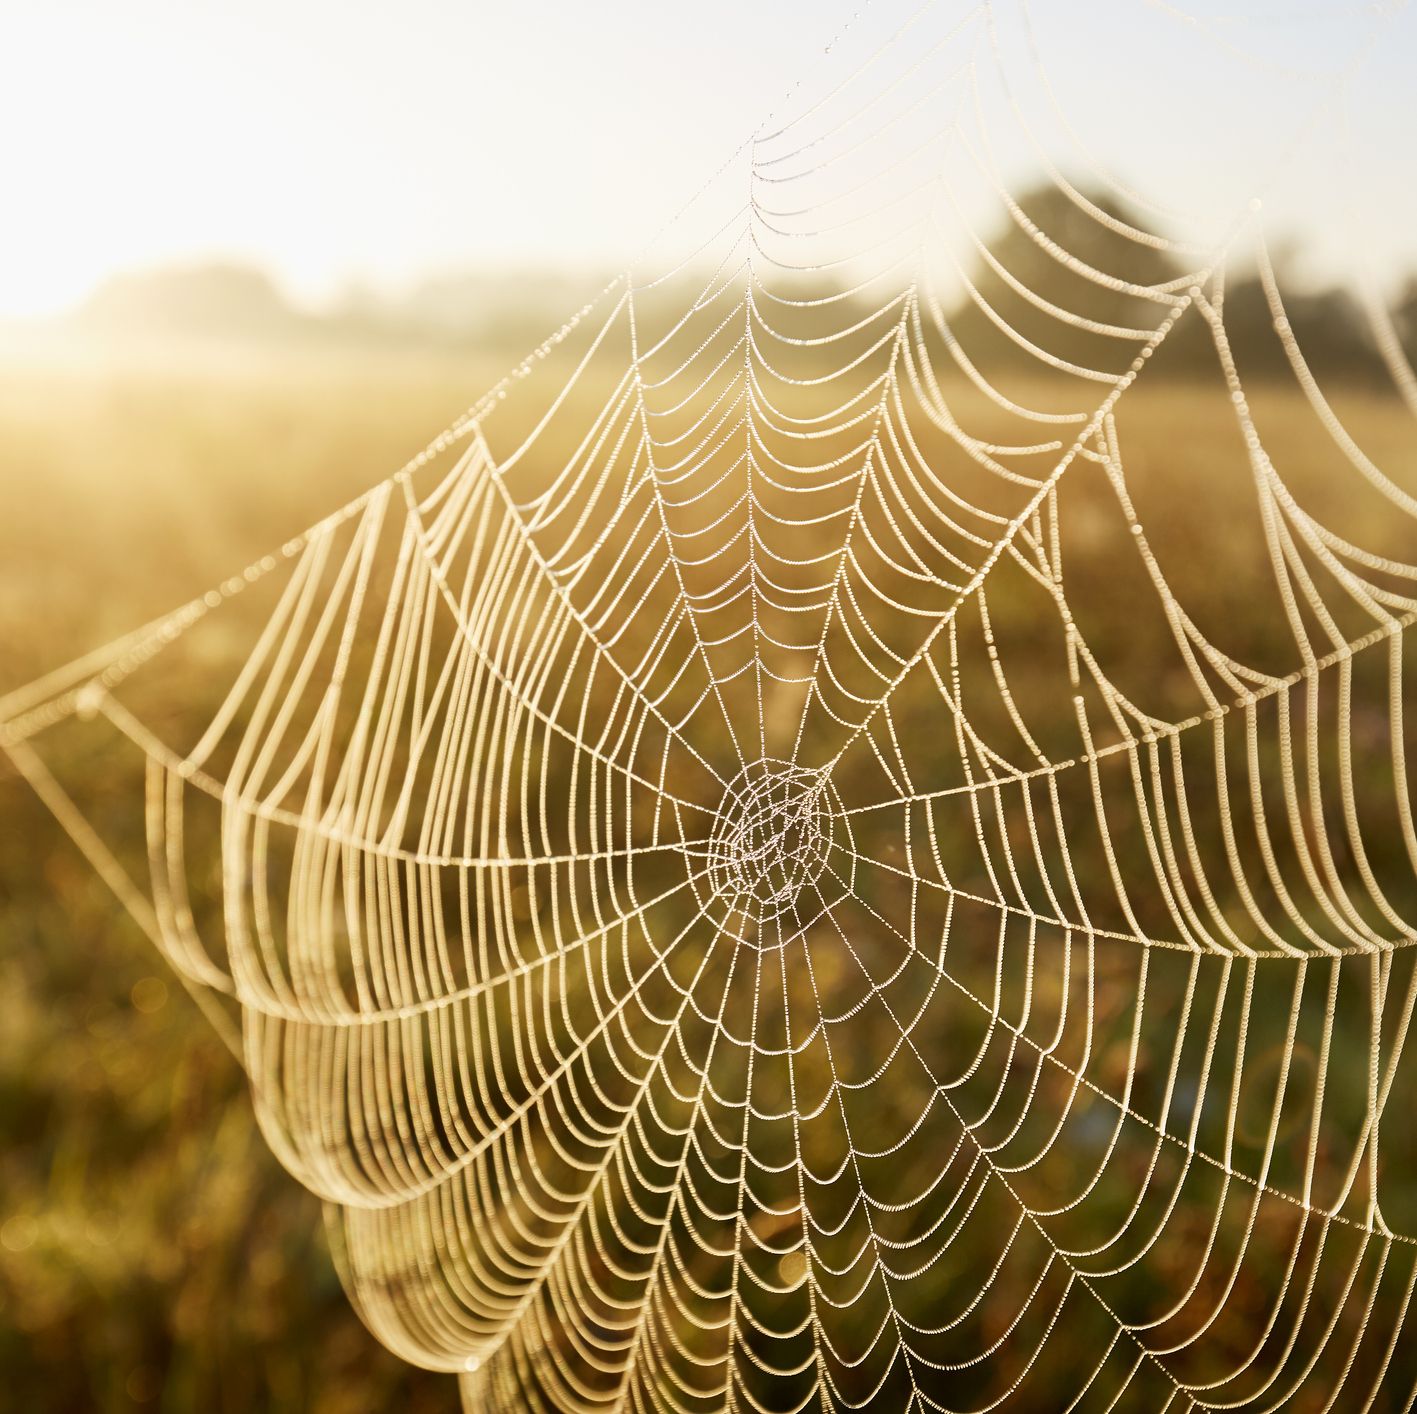 Spiderwebs Aren't Just Bug Traps. They're a Secret Lifeline for Endangered Species.